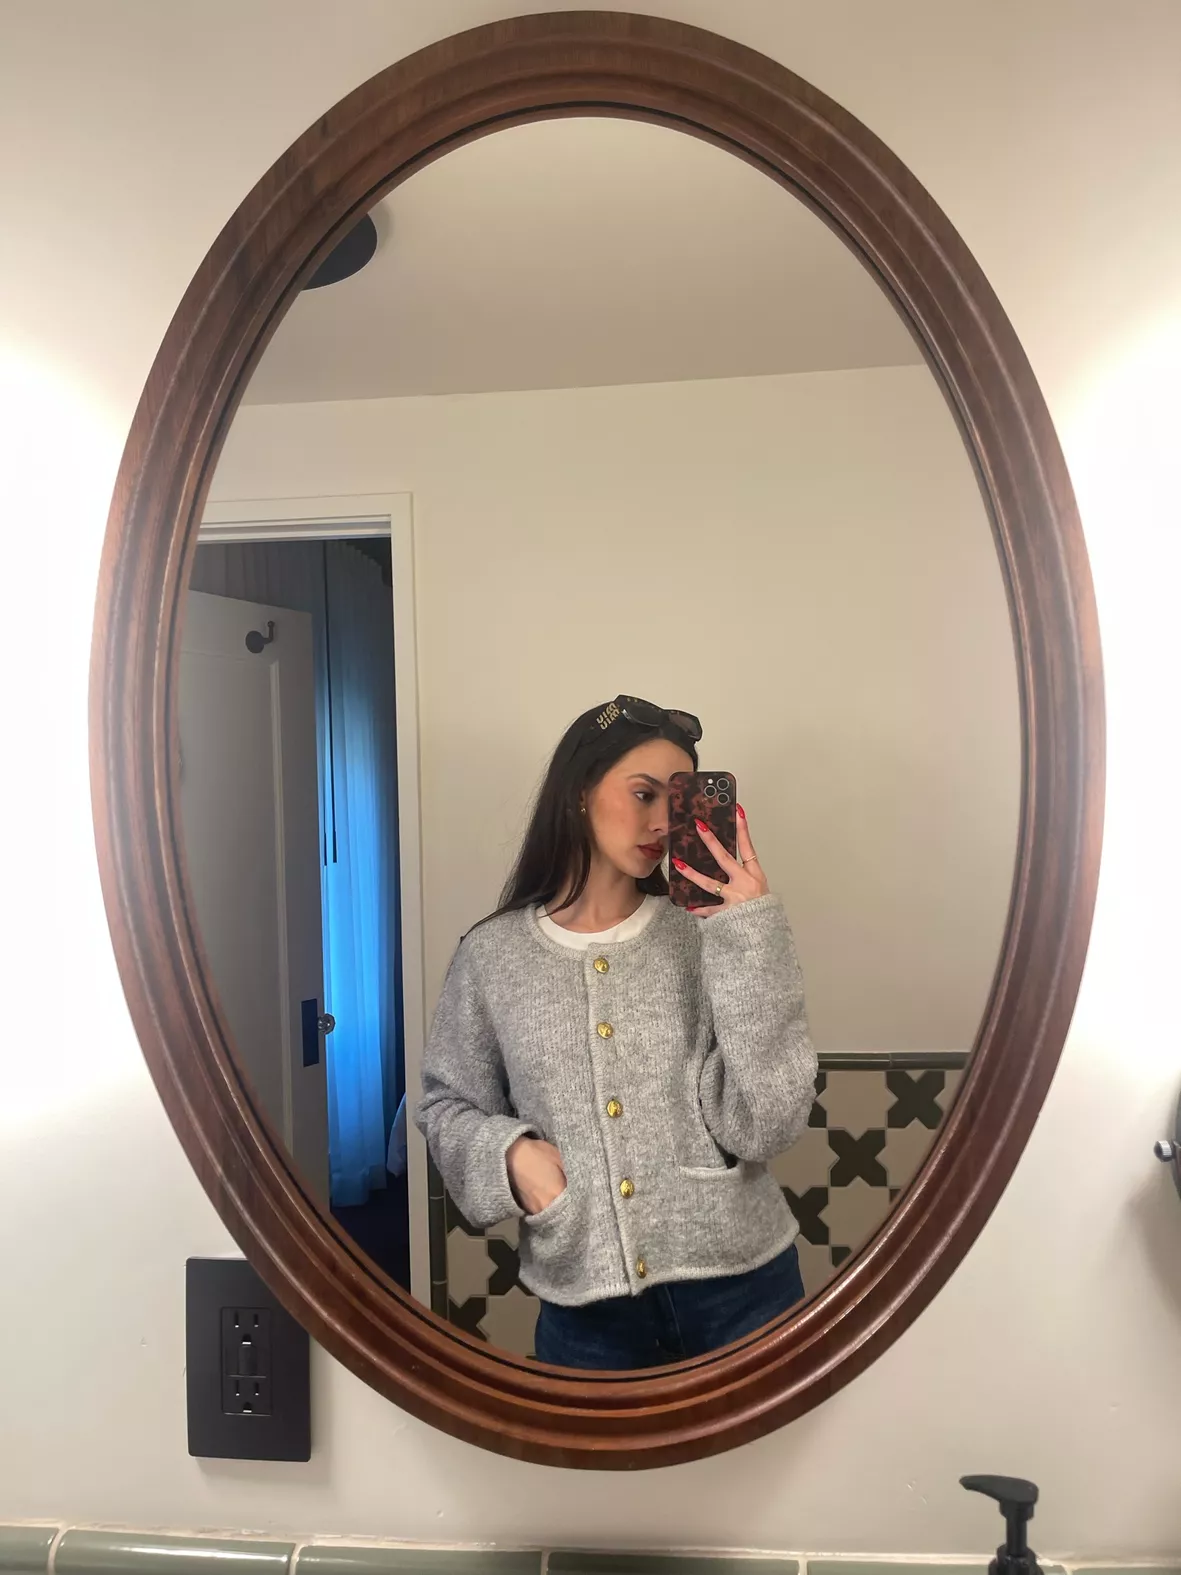 Boucle Cropped Sweater Jacket